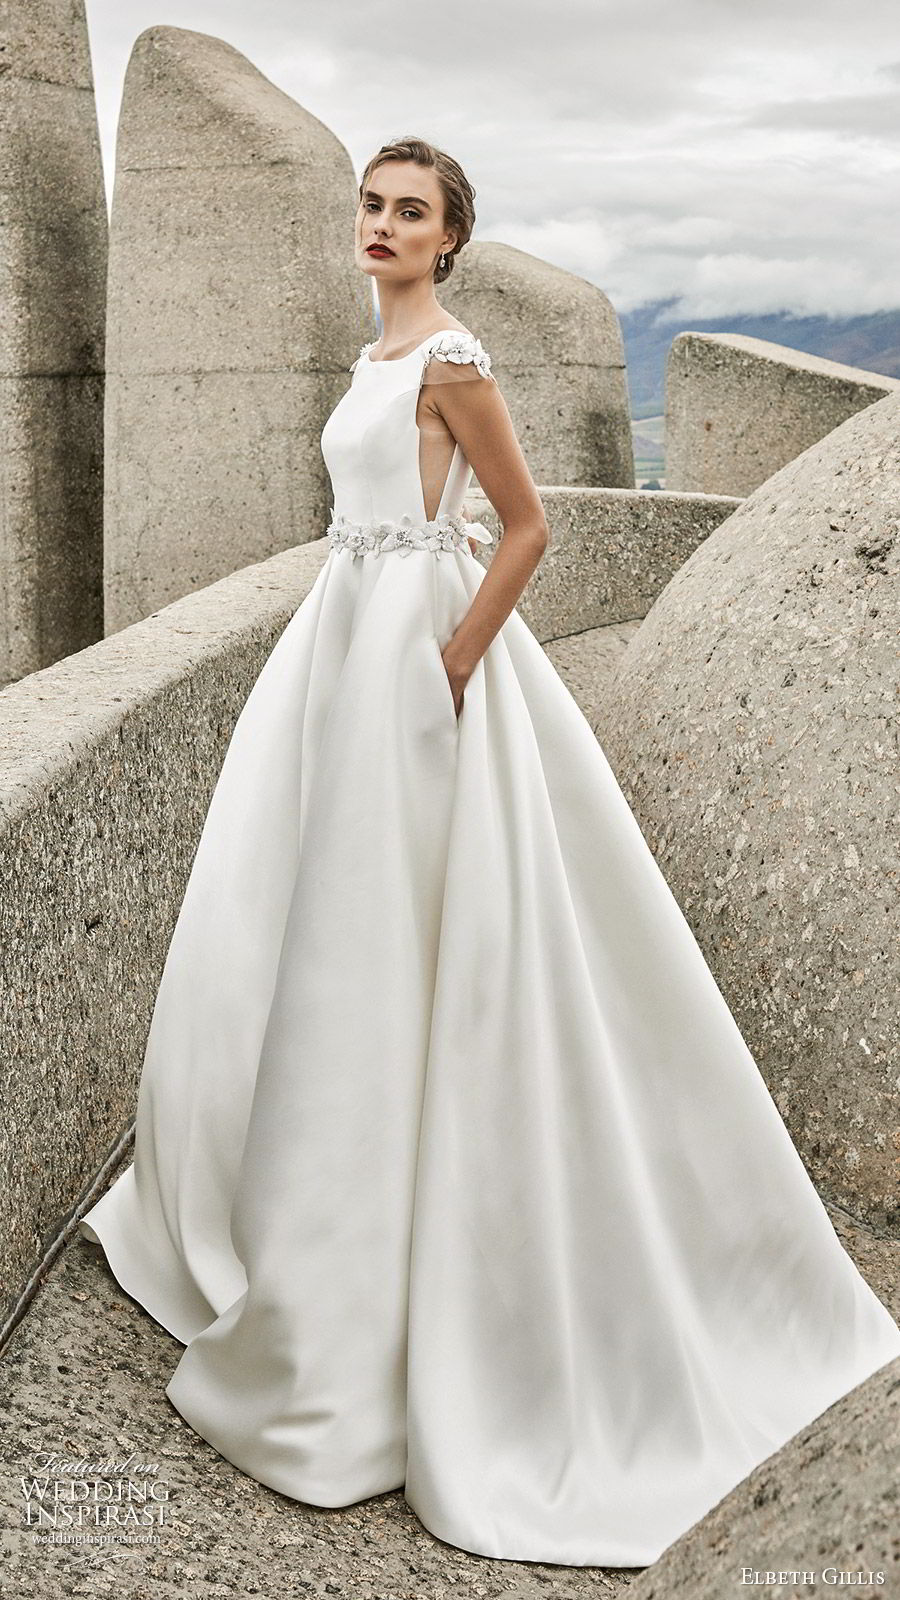 elbeth gillis 2020 bridal illusion cap sleeves bateau neckline side cutout beaded waist a line ball gown wedding dress (4) romantic princess v back chapel train sv